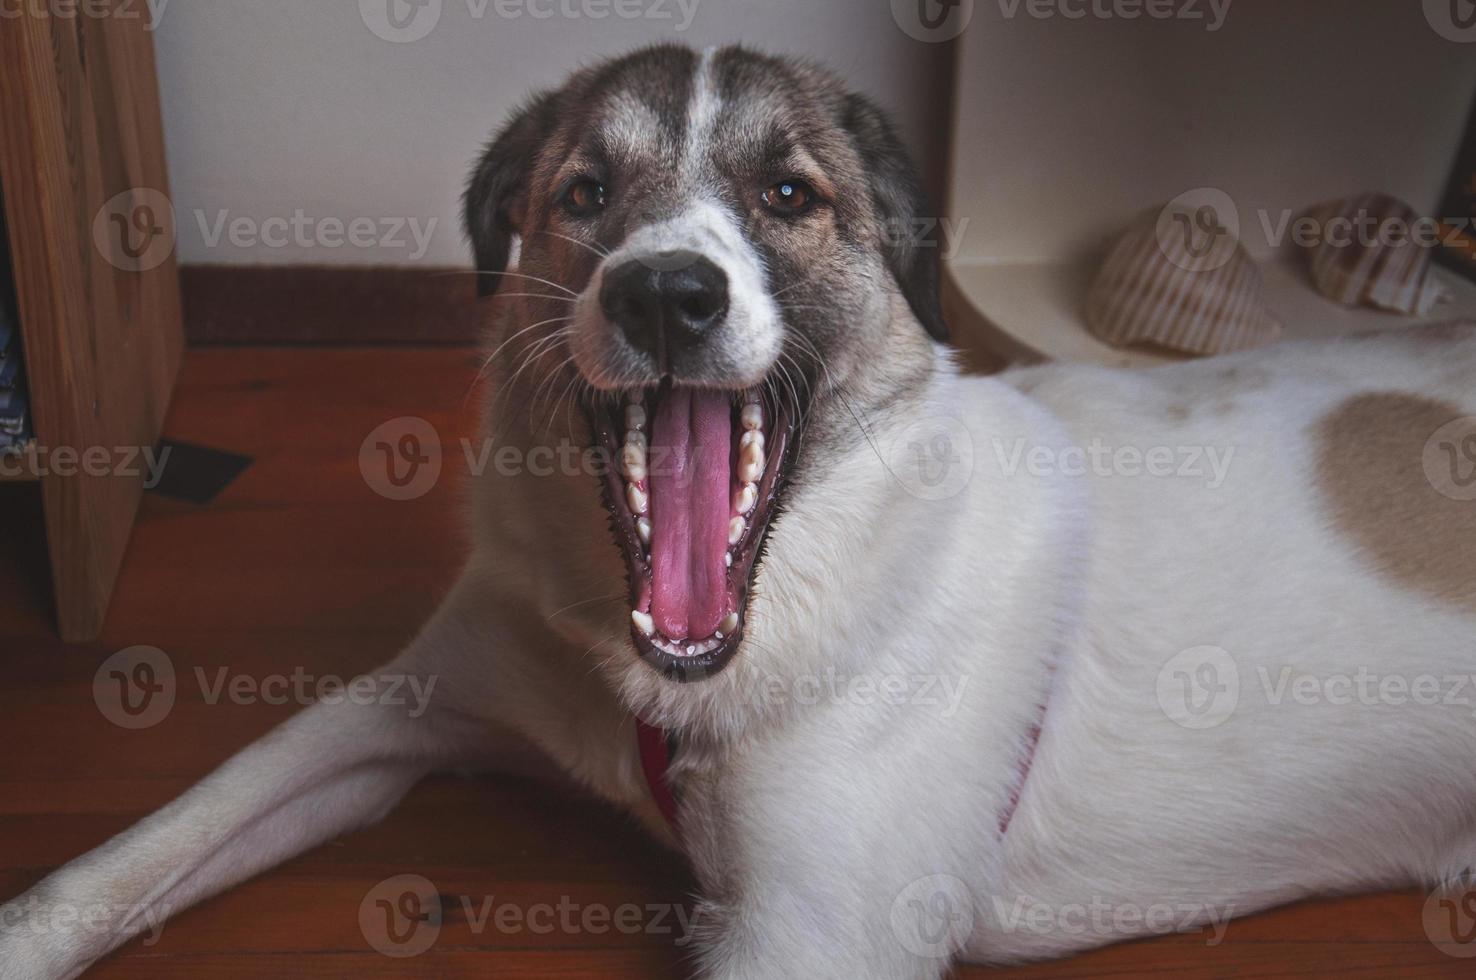 Closeup dog portrait. Yawning dog with tongue out photo